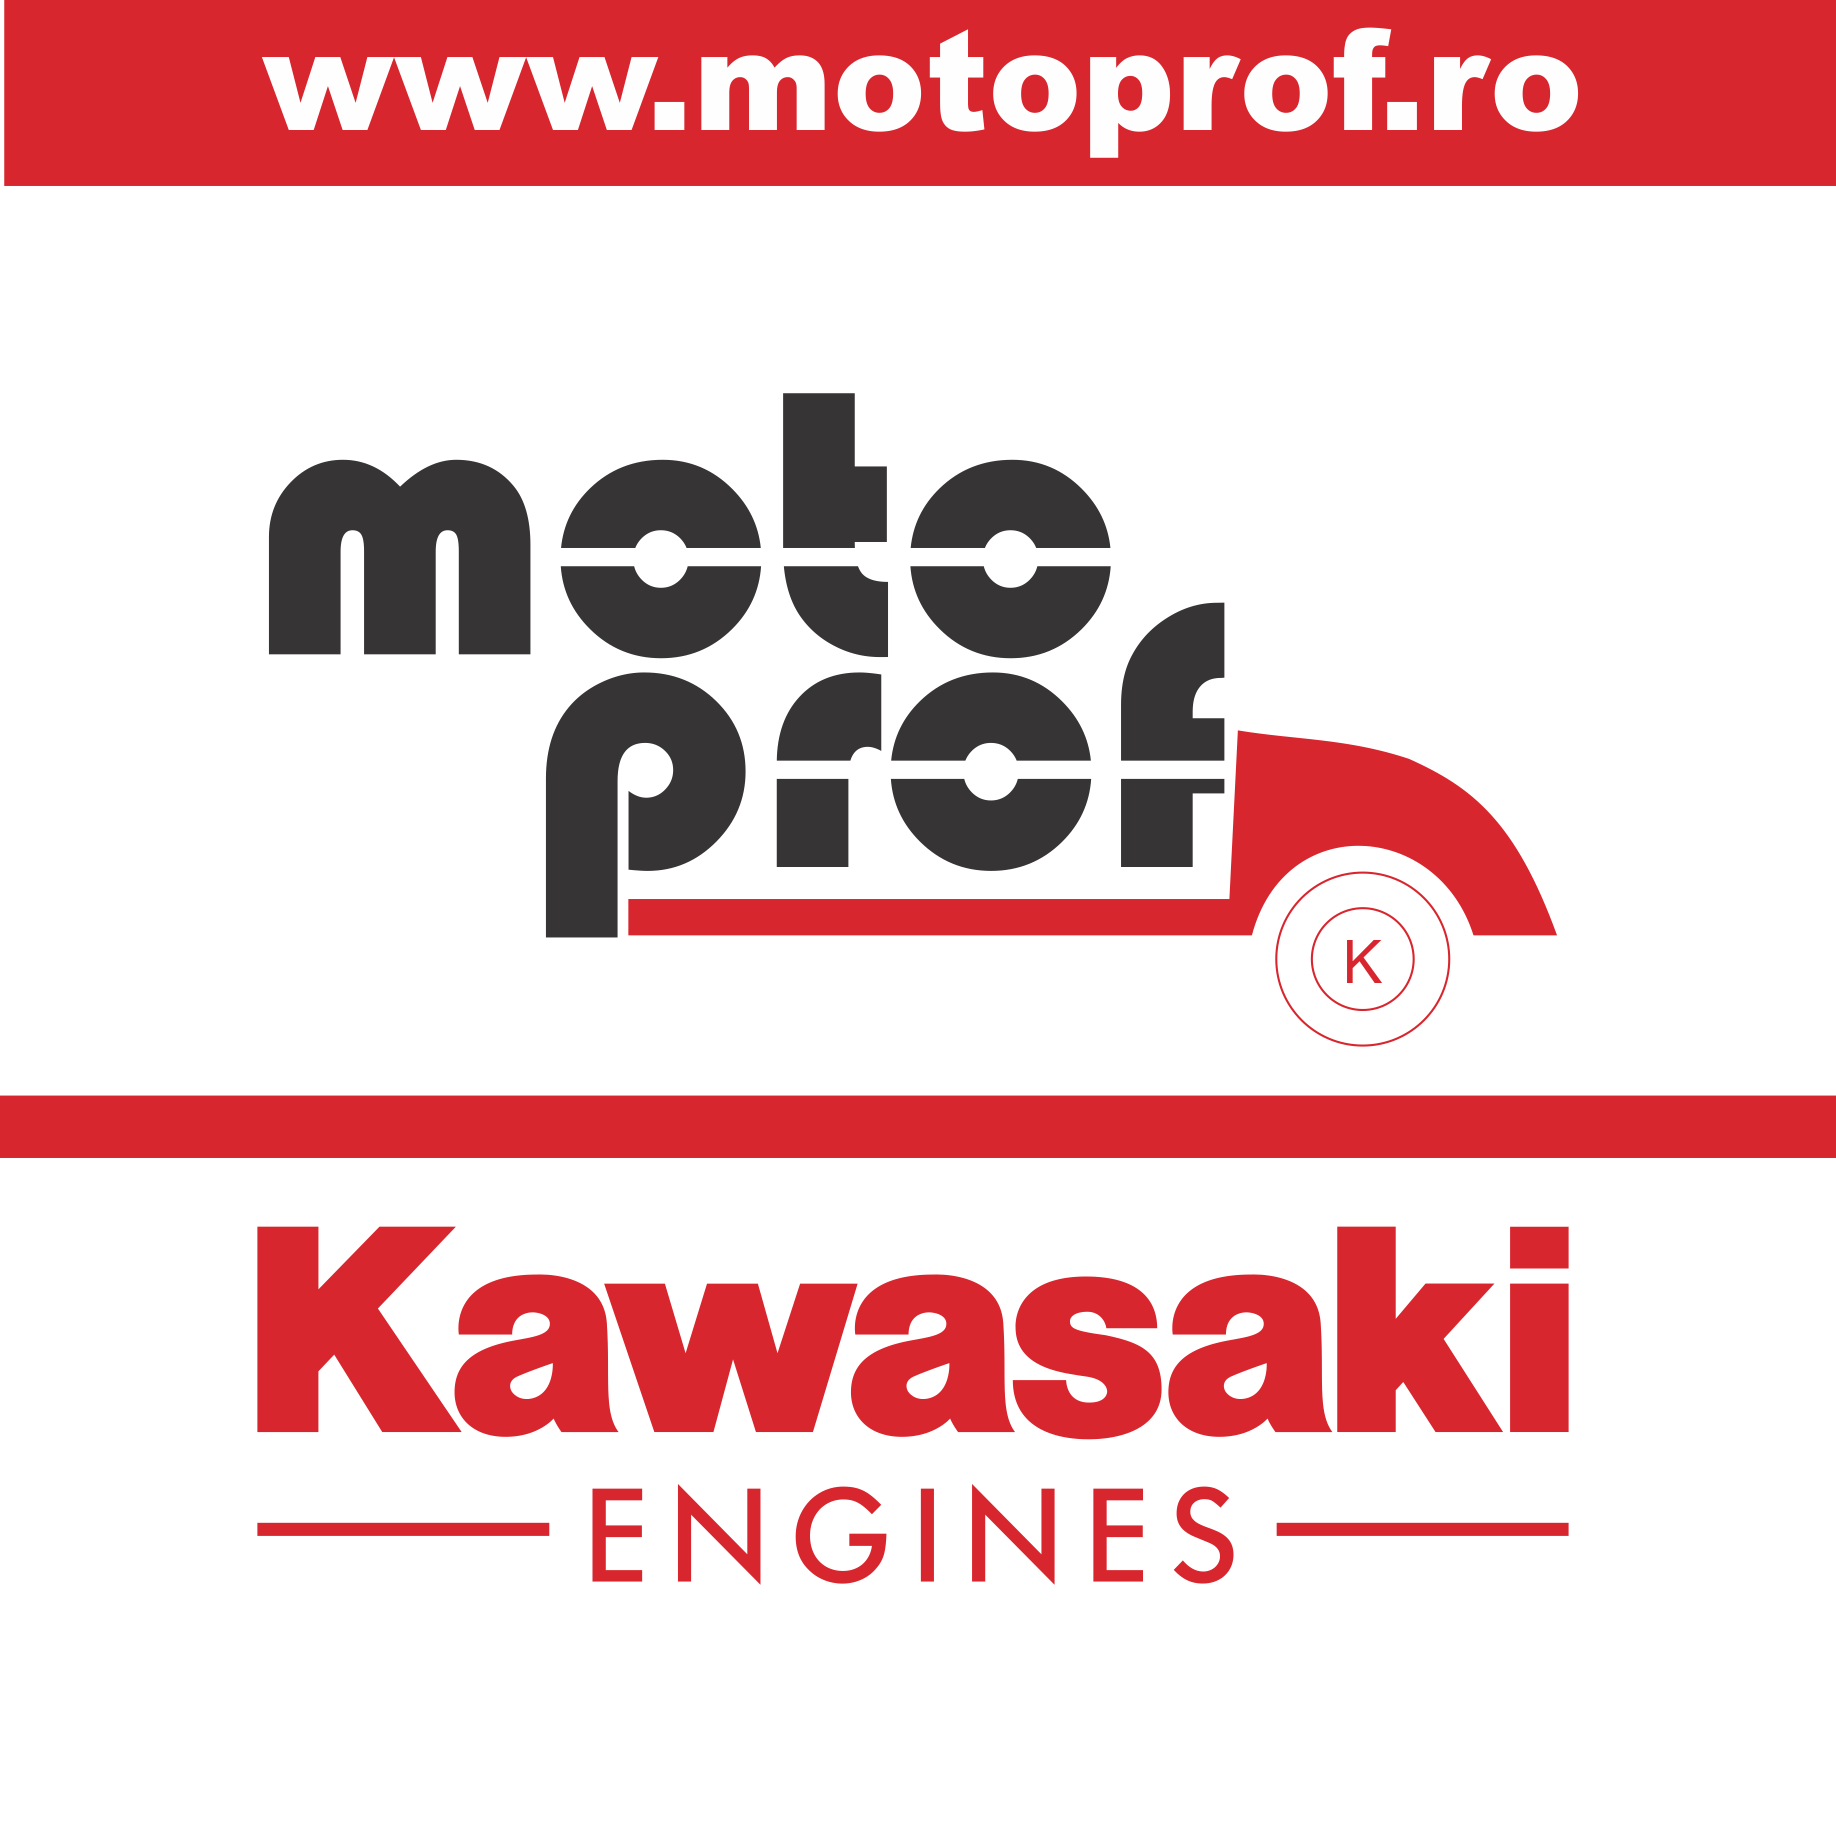 Motoprof - MOTOare PROFesionale in romania